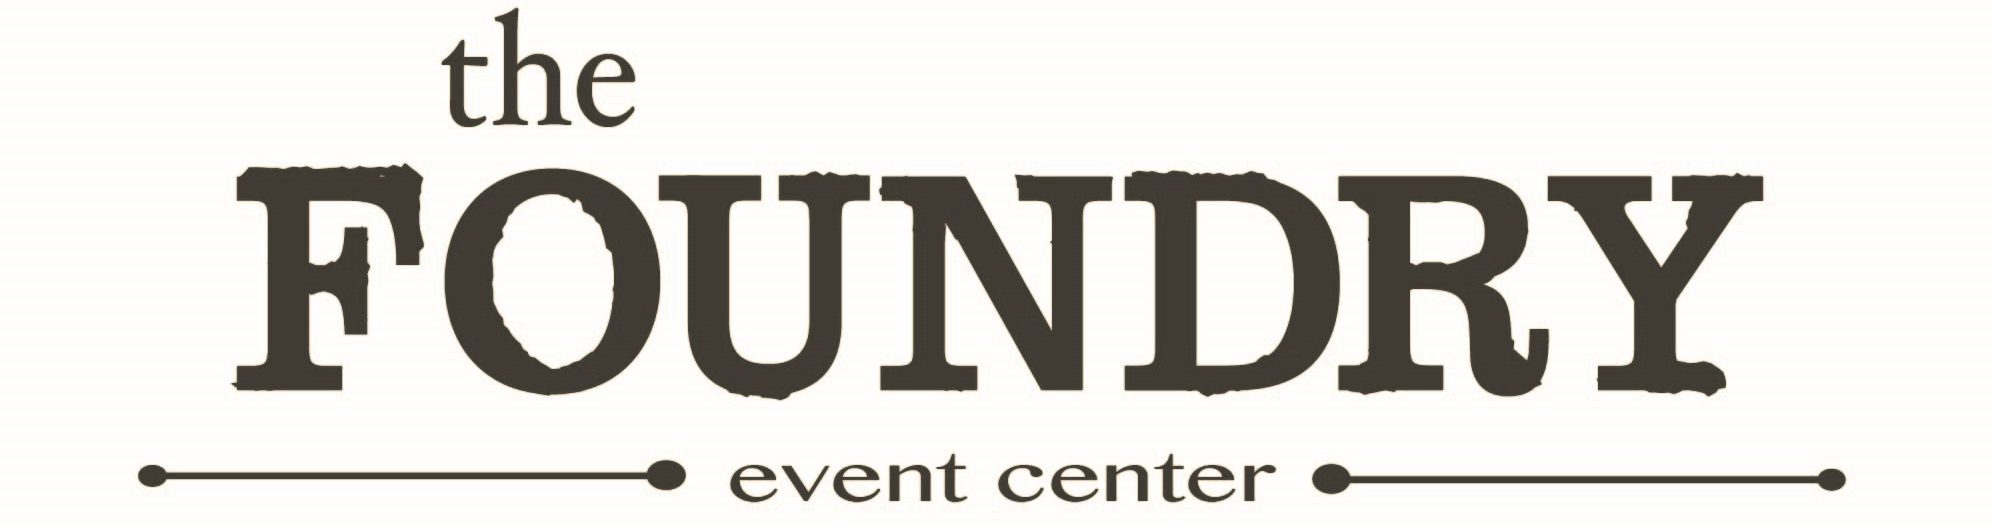 The Foundry Event Center